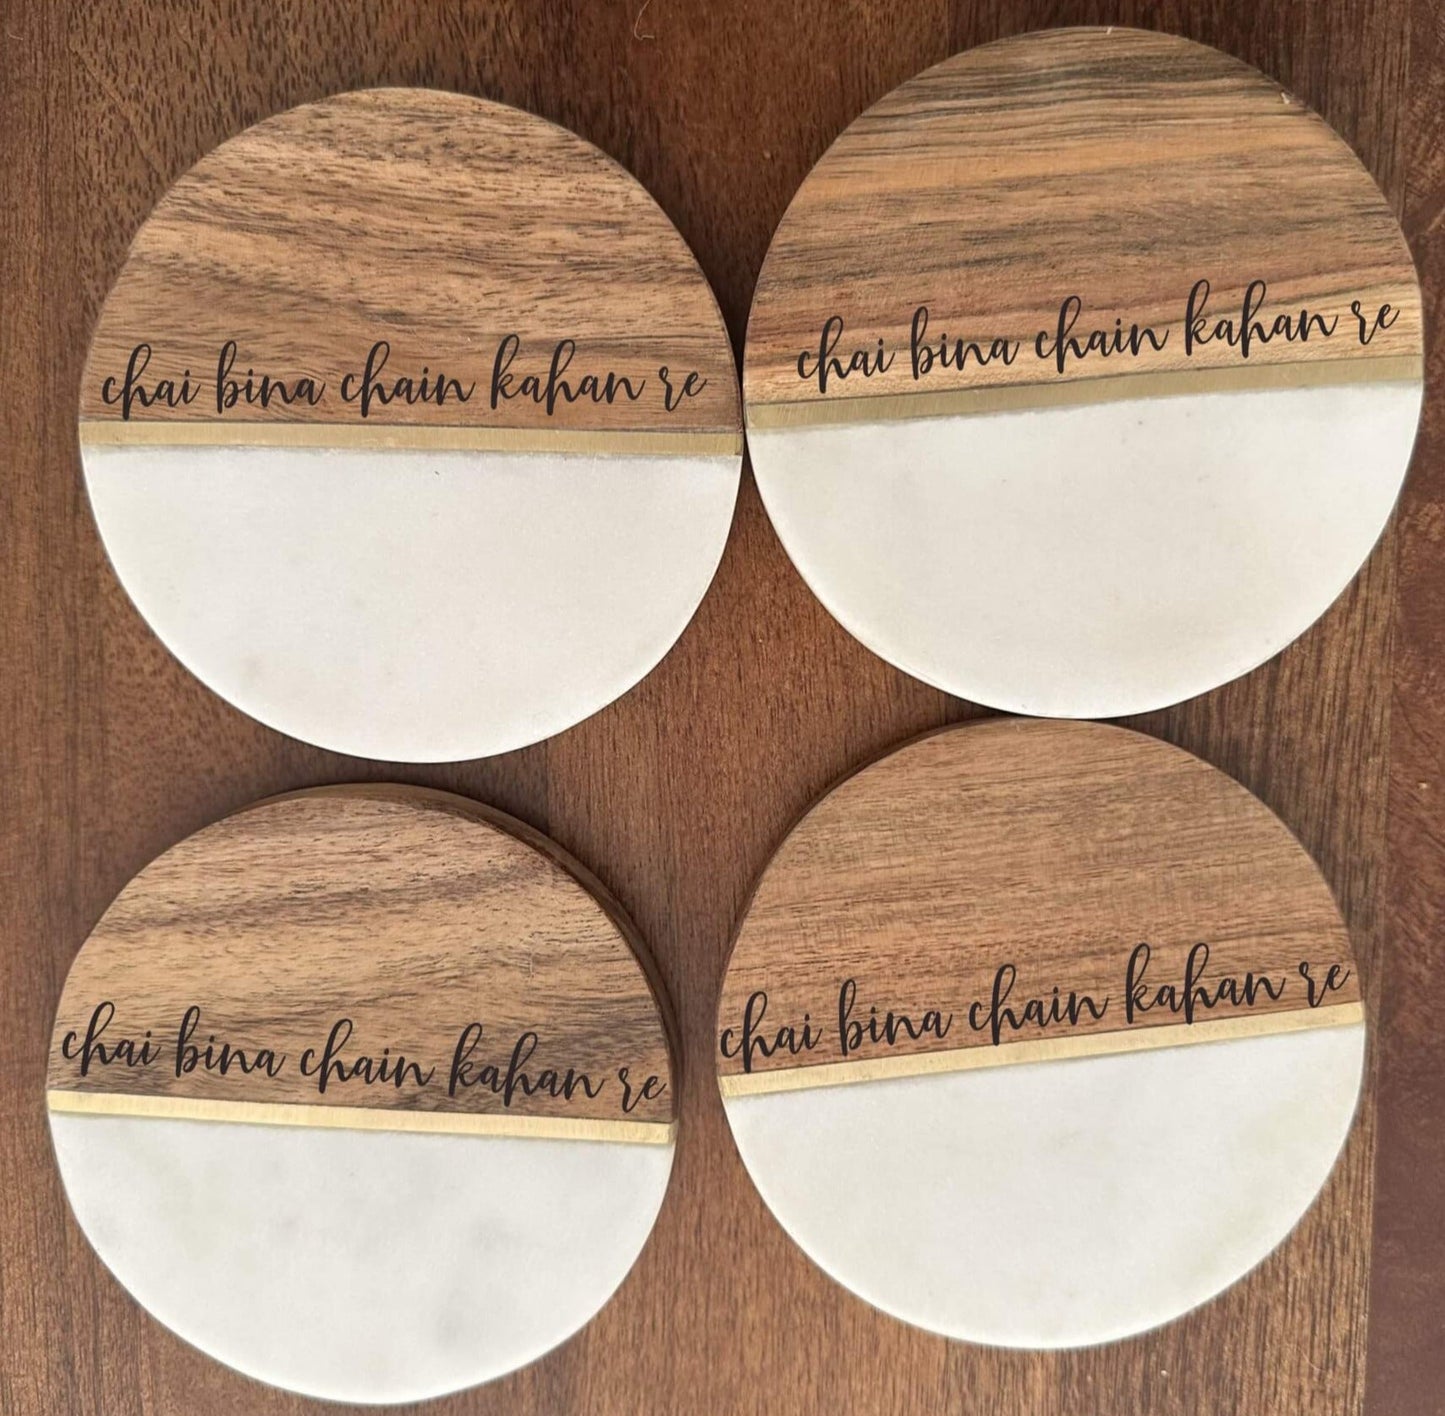 Chai Bina Chain Kahan Re  Tea Coasters Marble Wood with brass inlay (set of 4) Tinted Heritage